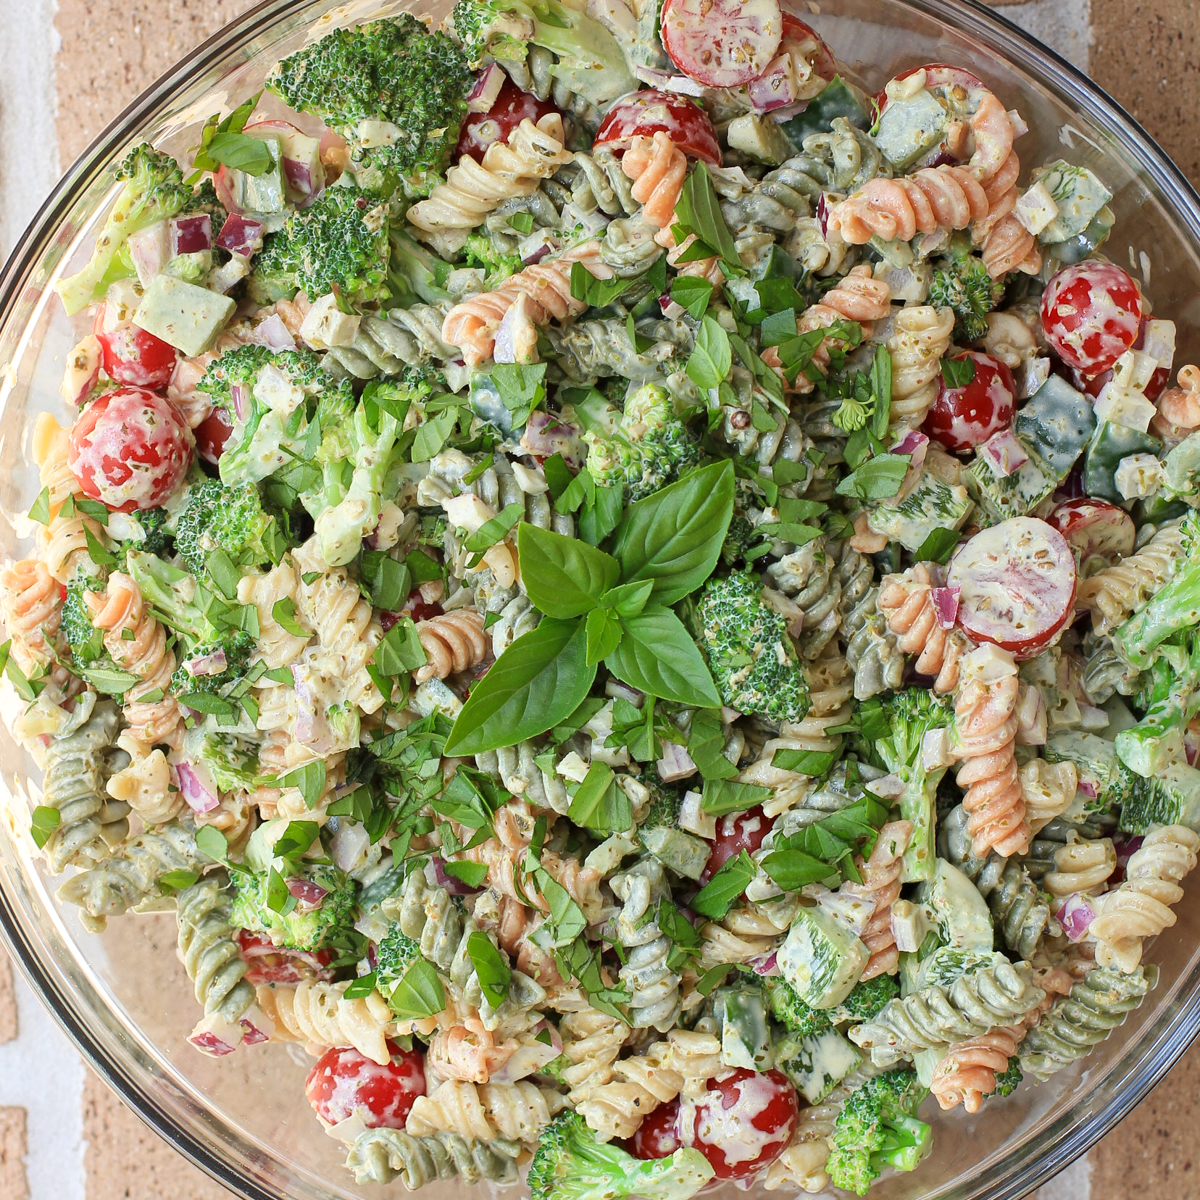 prepared pesto pasta salad recipe in glass bowl